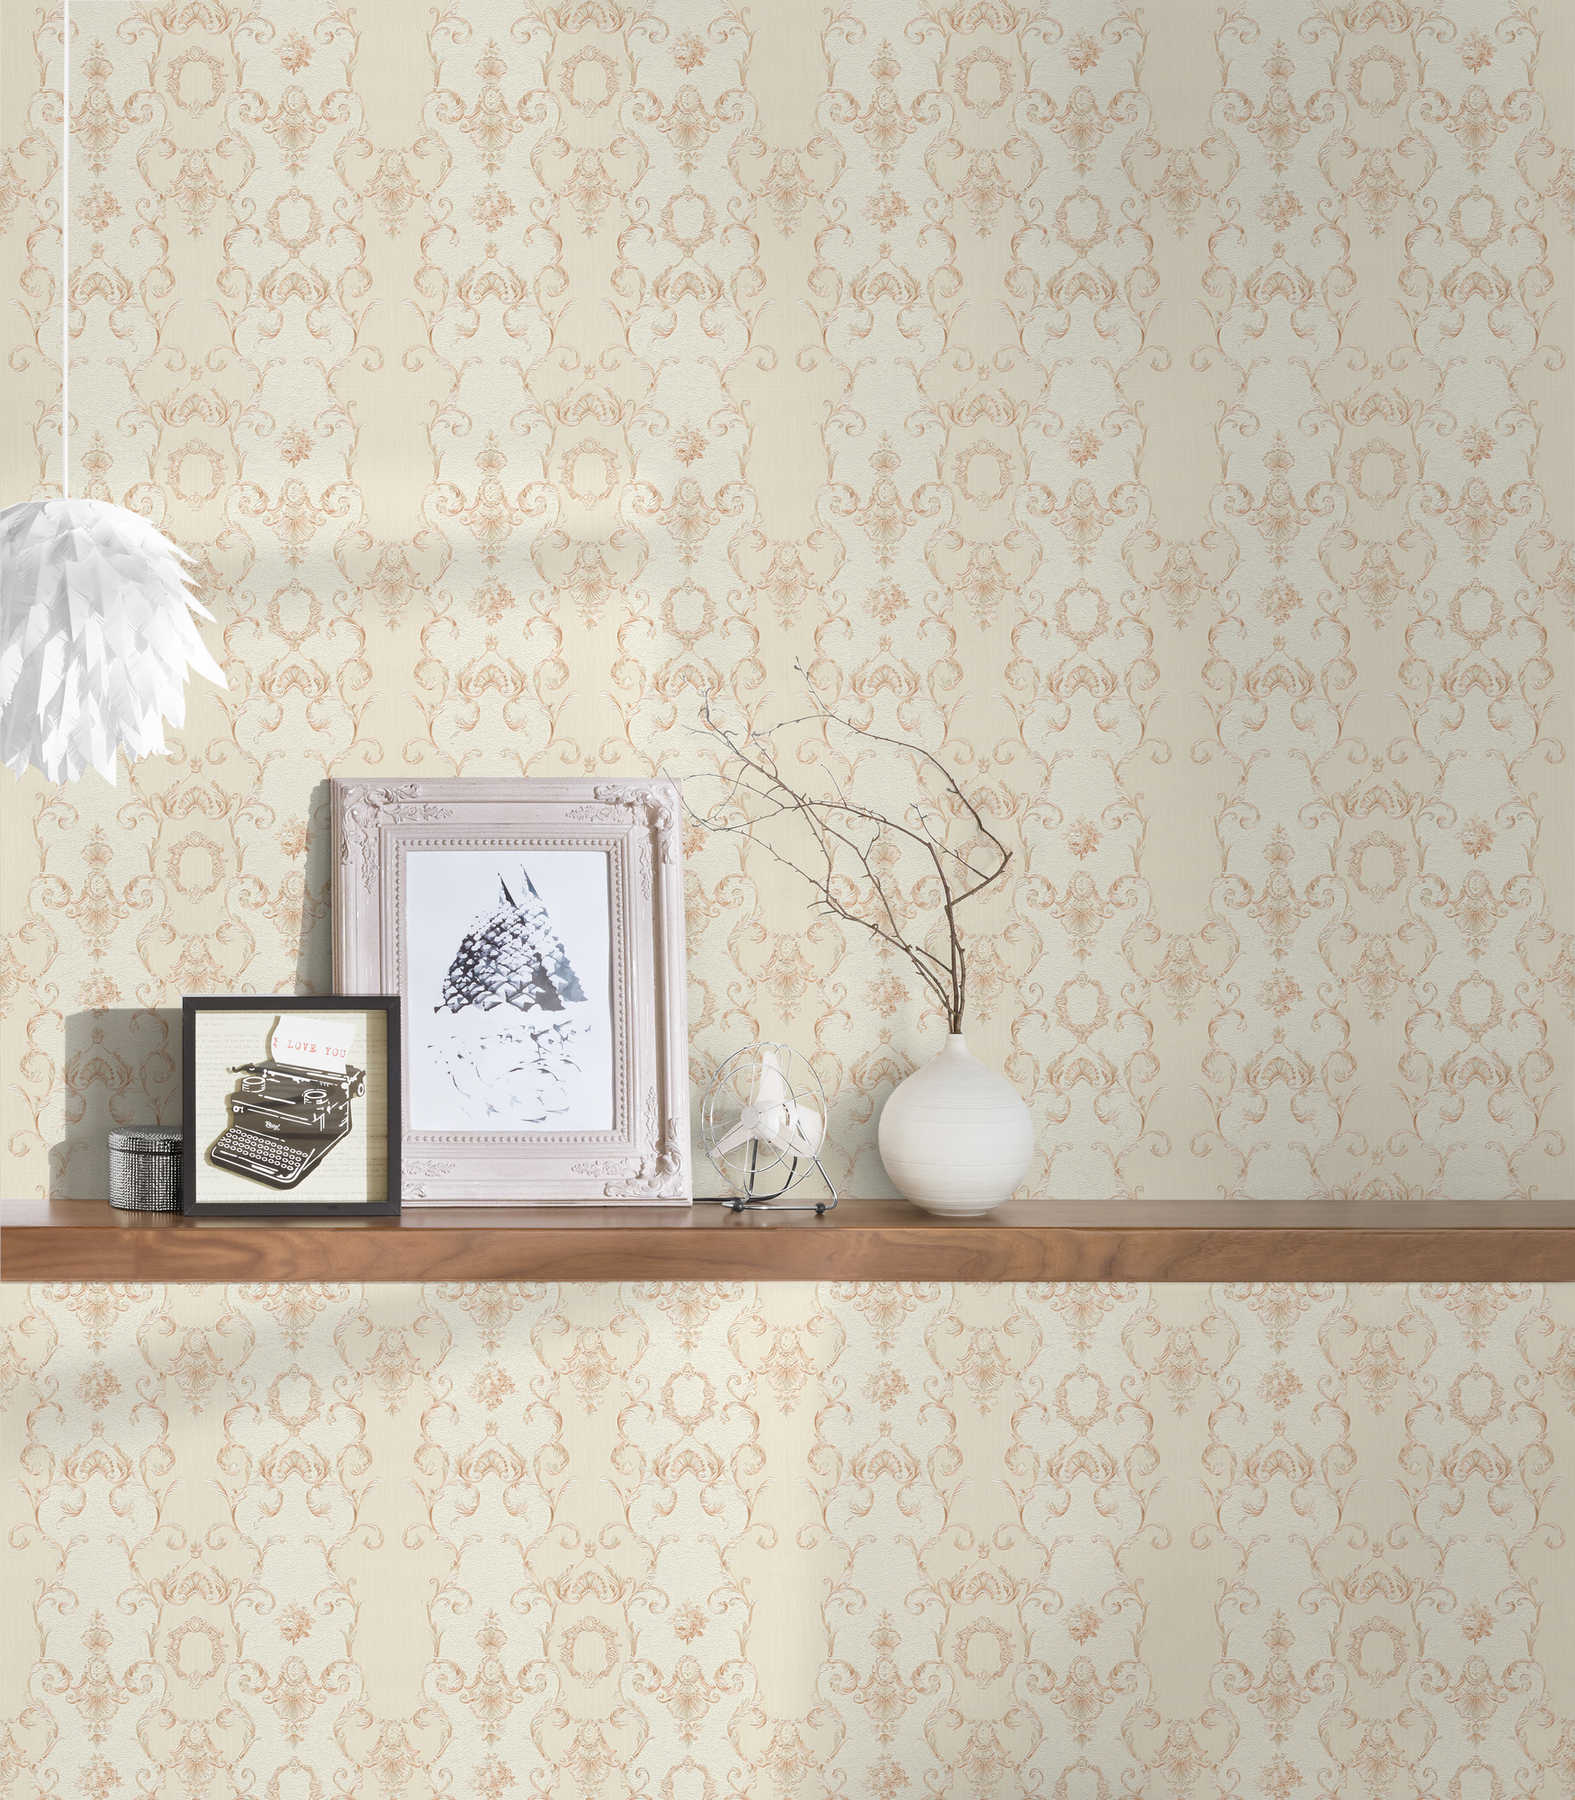             Neo-baroque wallpaper filigree ornaments - beige, cream, metallic
        